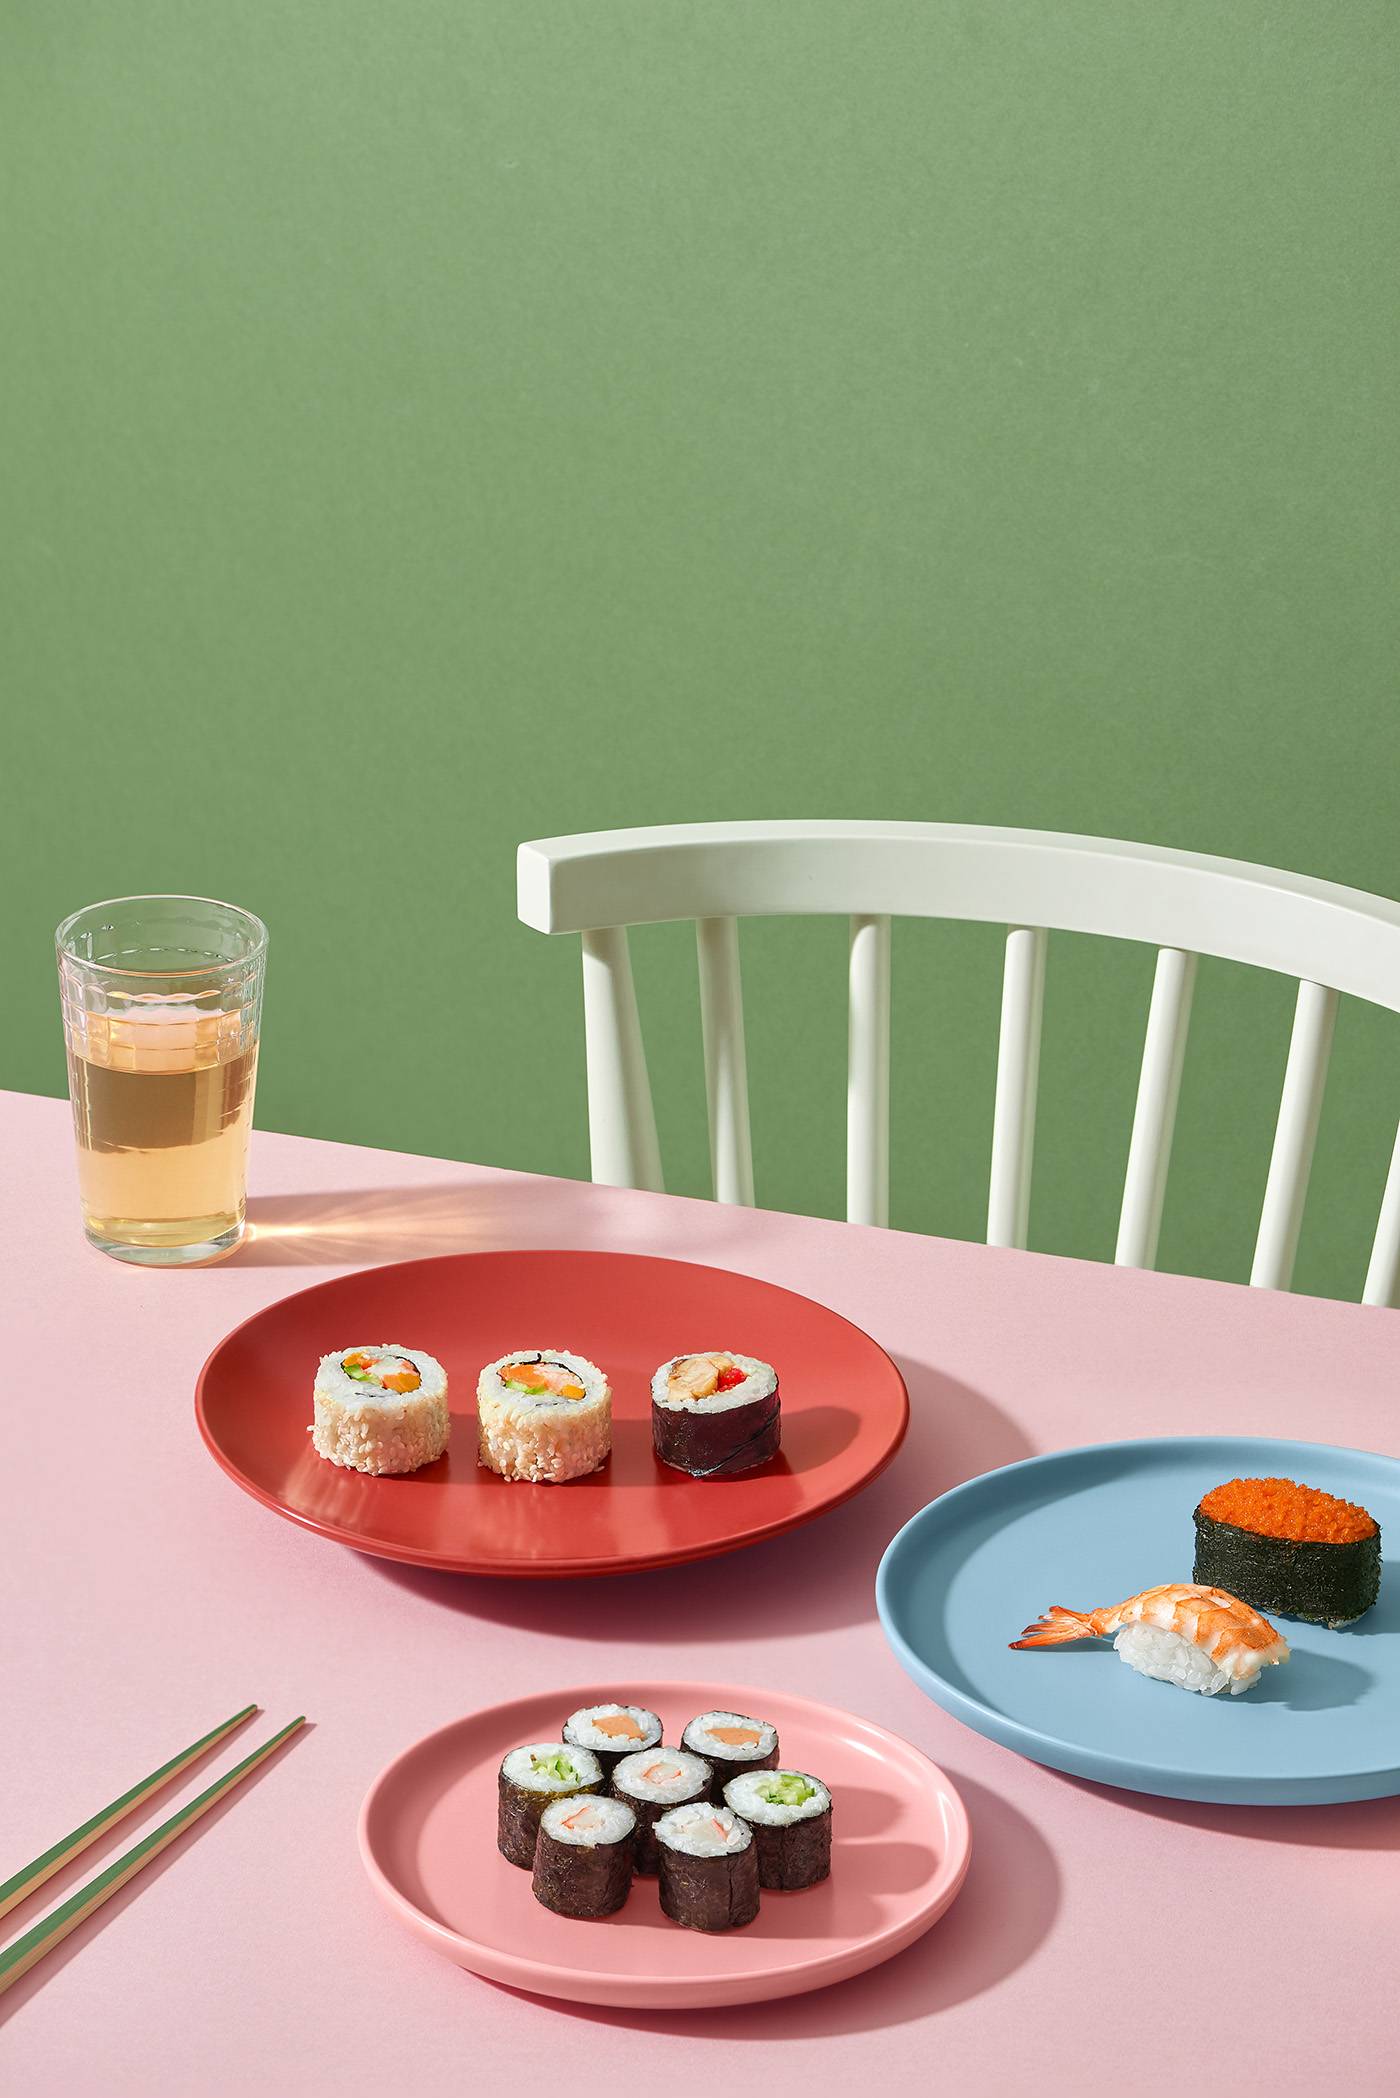 Sushi Maki Roll - Japanese Food Style Japanese food restaurant, colorful rolls, gunkan and sushi platter